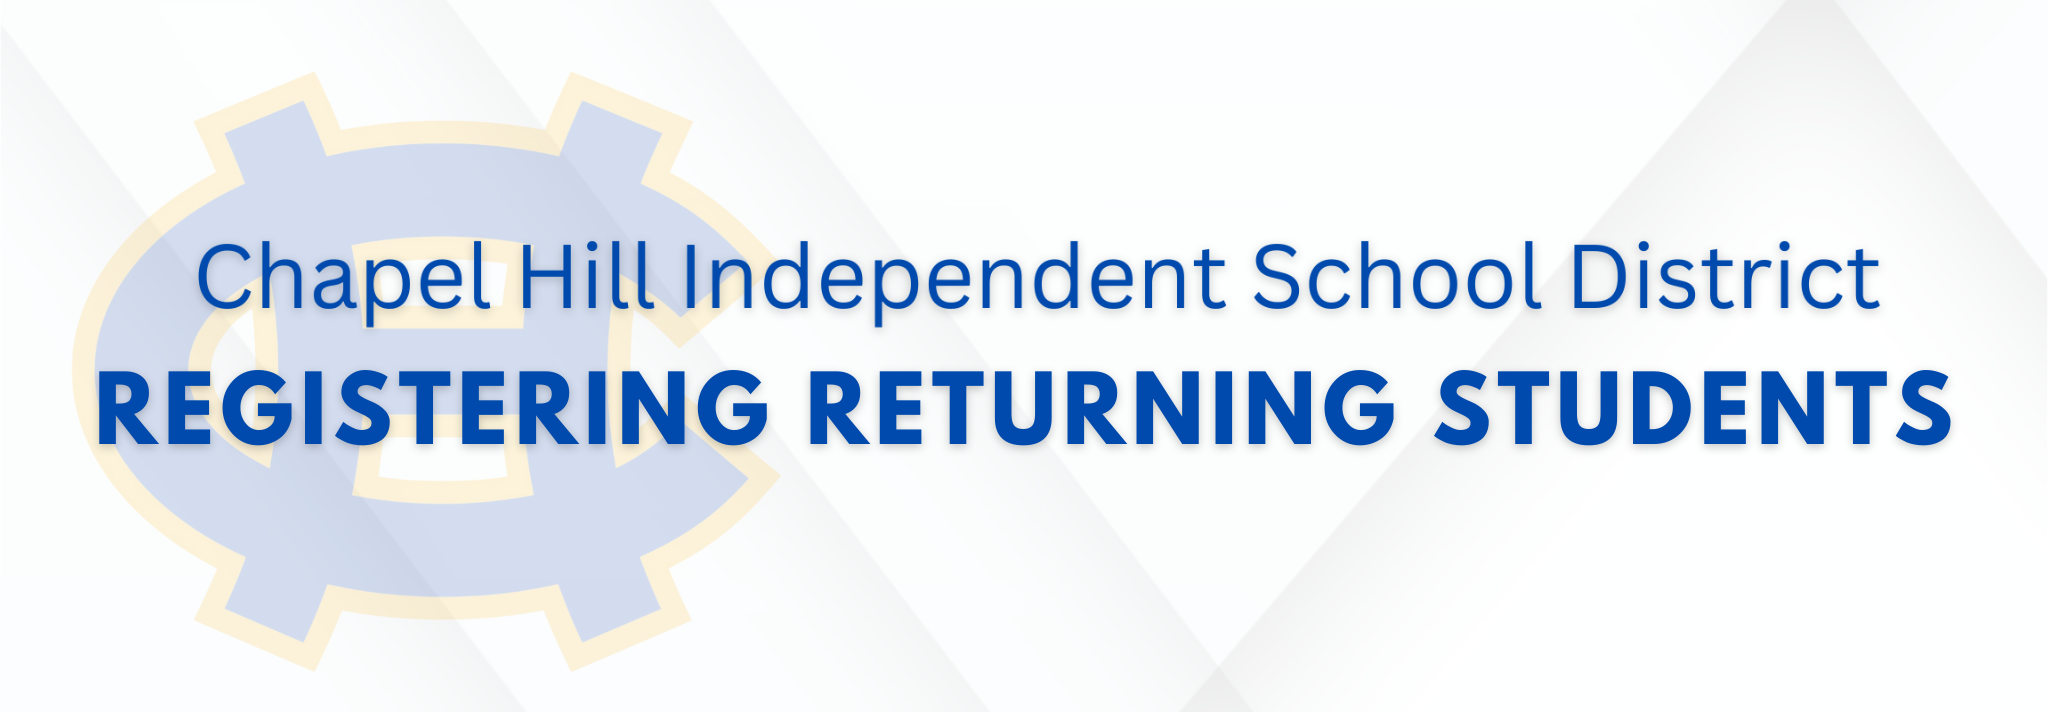 Registering returning students